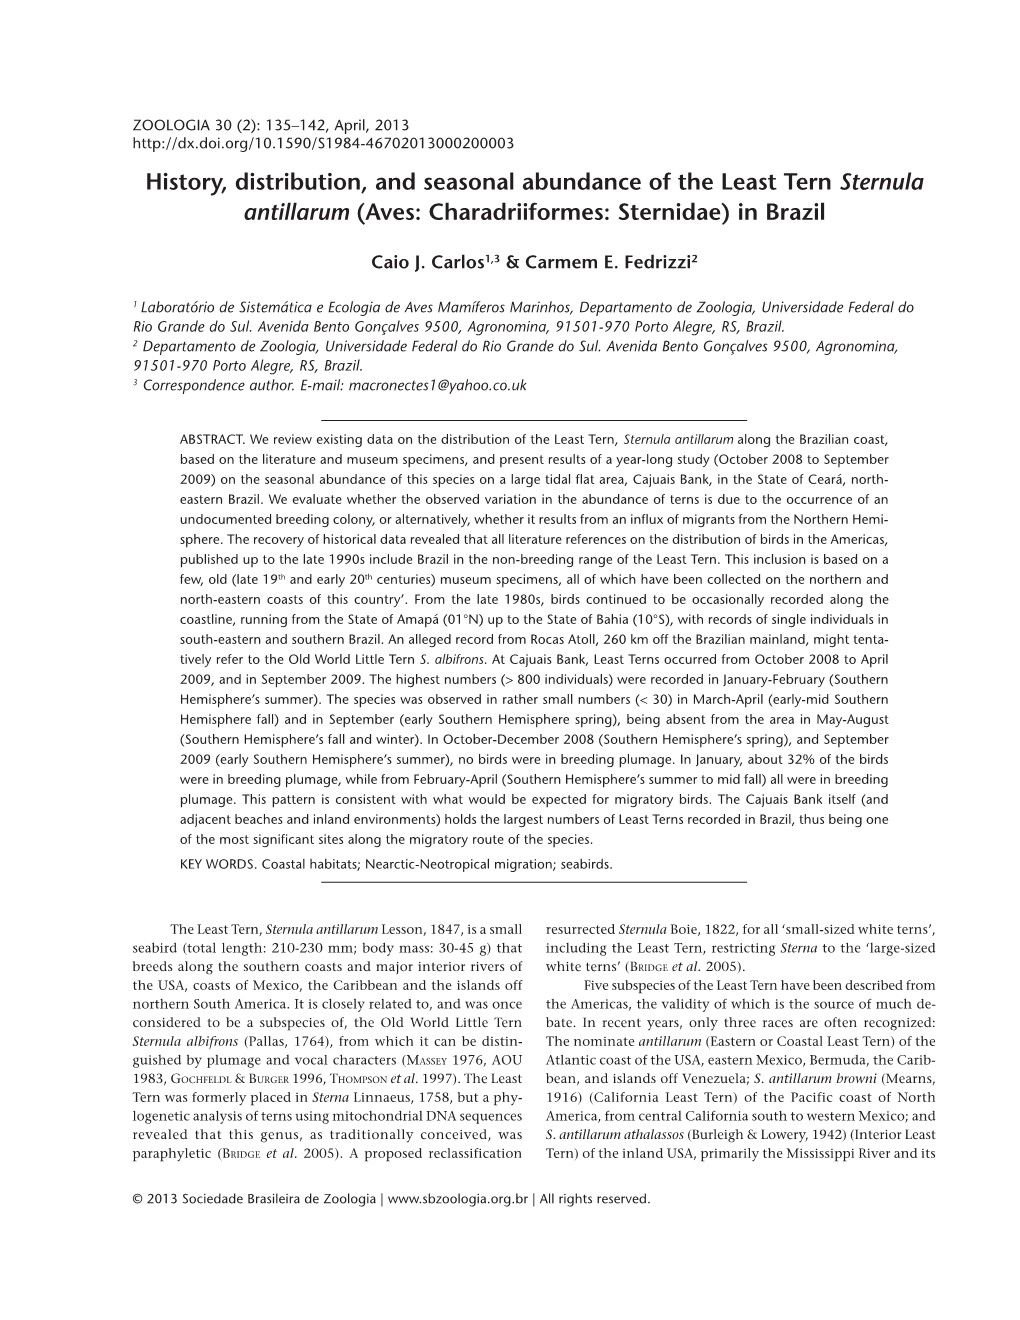 History, Distribution, and Seasonal Abundance of the Least Tern Sternula Antillarum (Aves: Charadriiformes: Sternidae) in Brazil